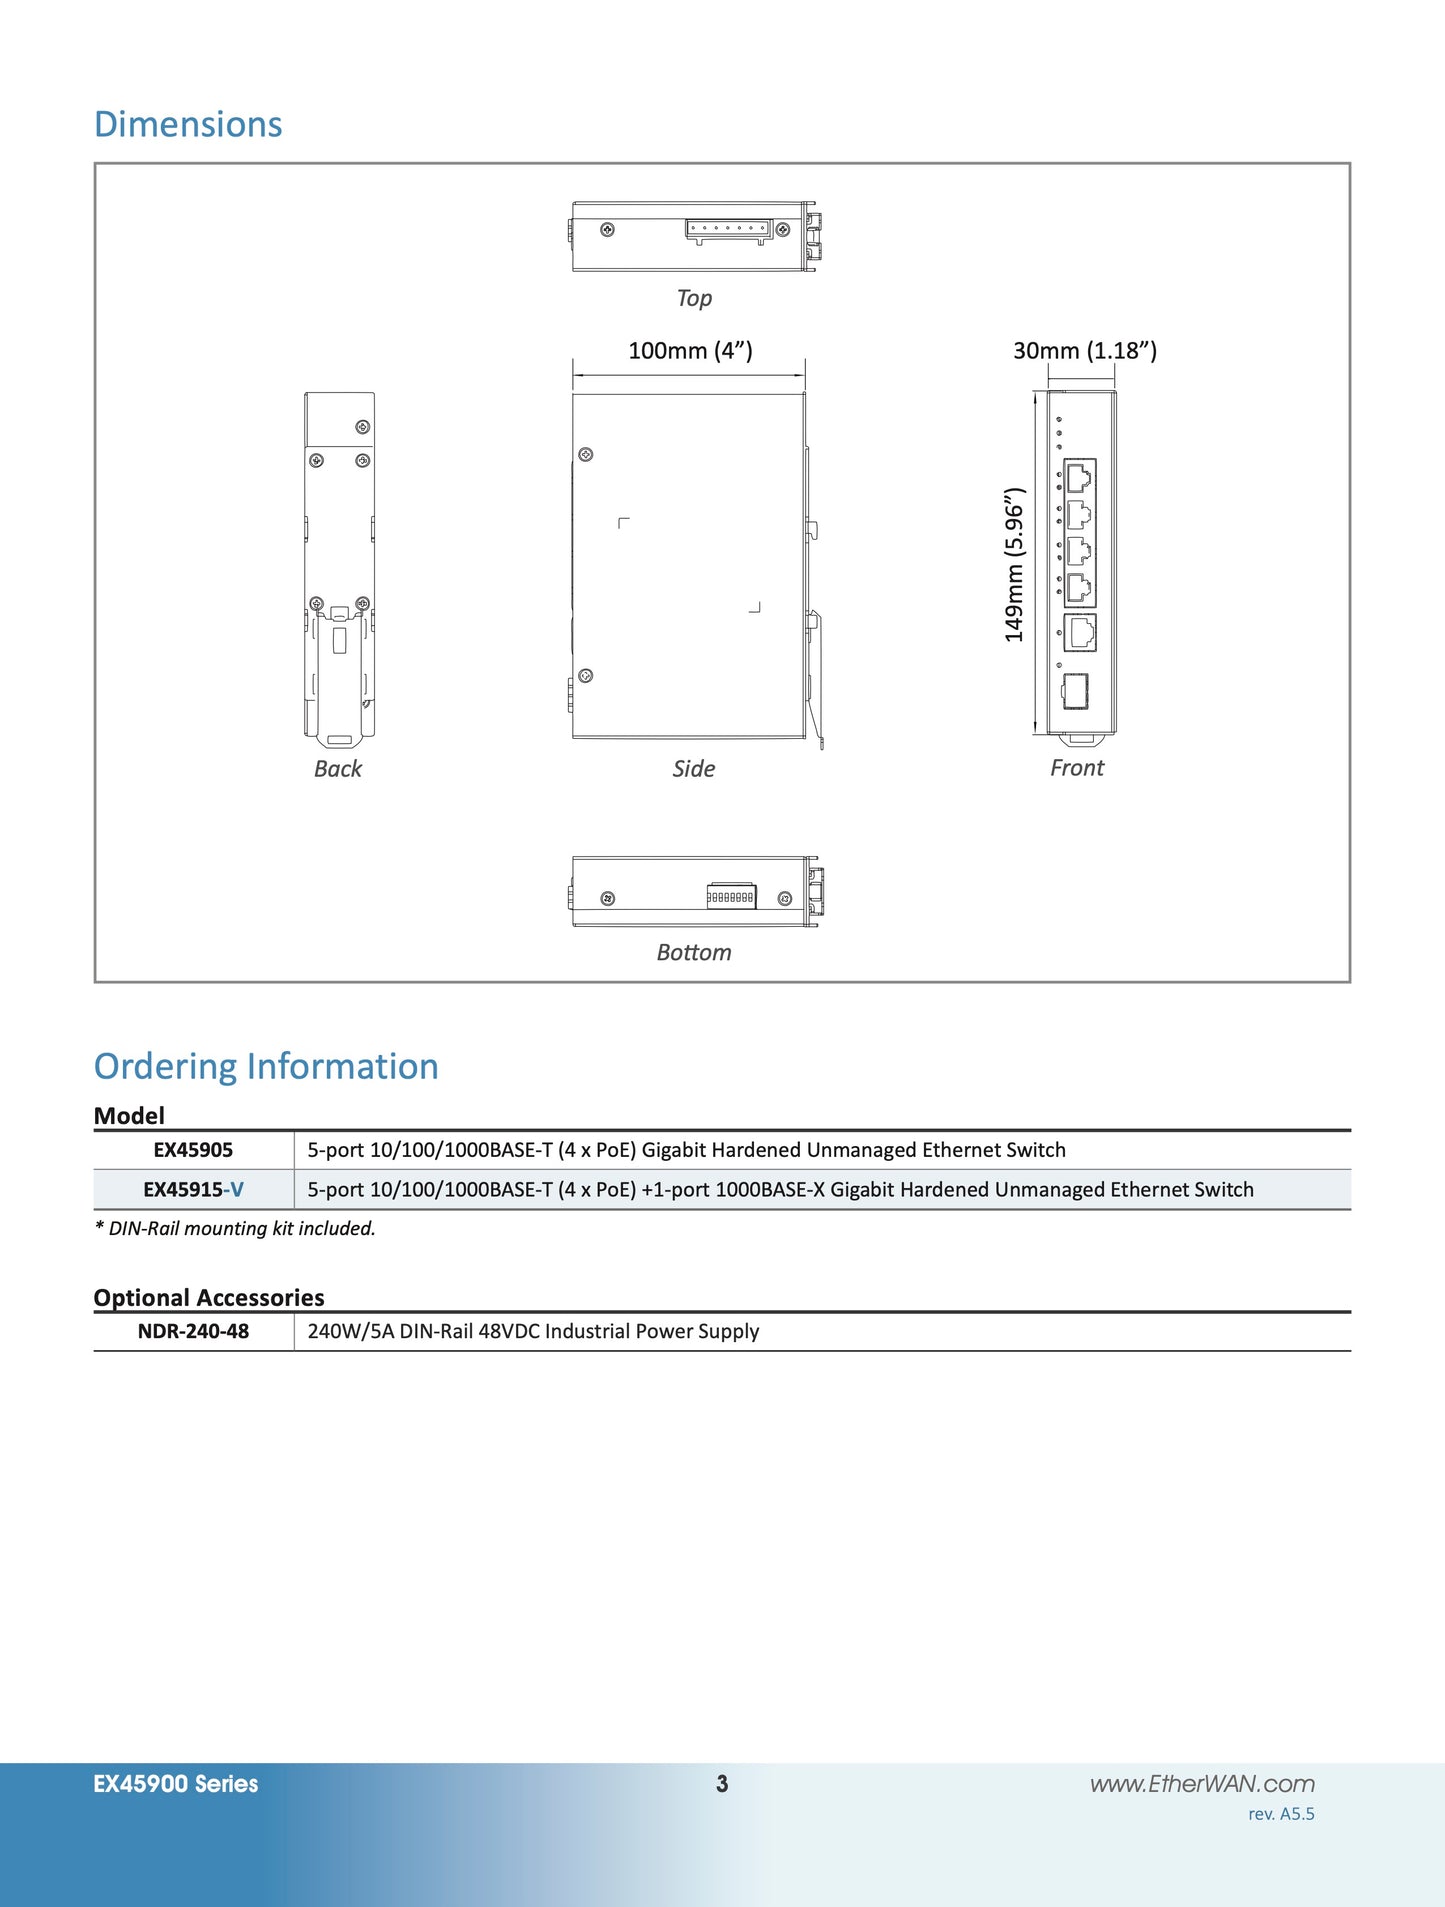 EX45915-5 - Hardened Unmanaged Gigabit Ethernet Switch 5-port 10/100/1000BASE-T (4 x PoE) + 1-port Gigabit Fiber (ST)